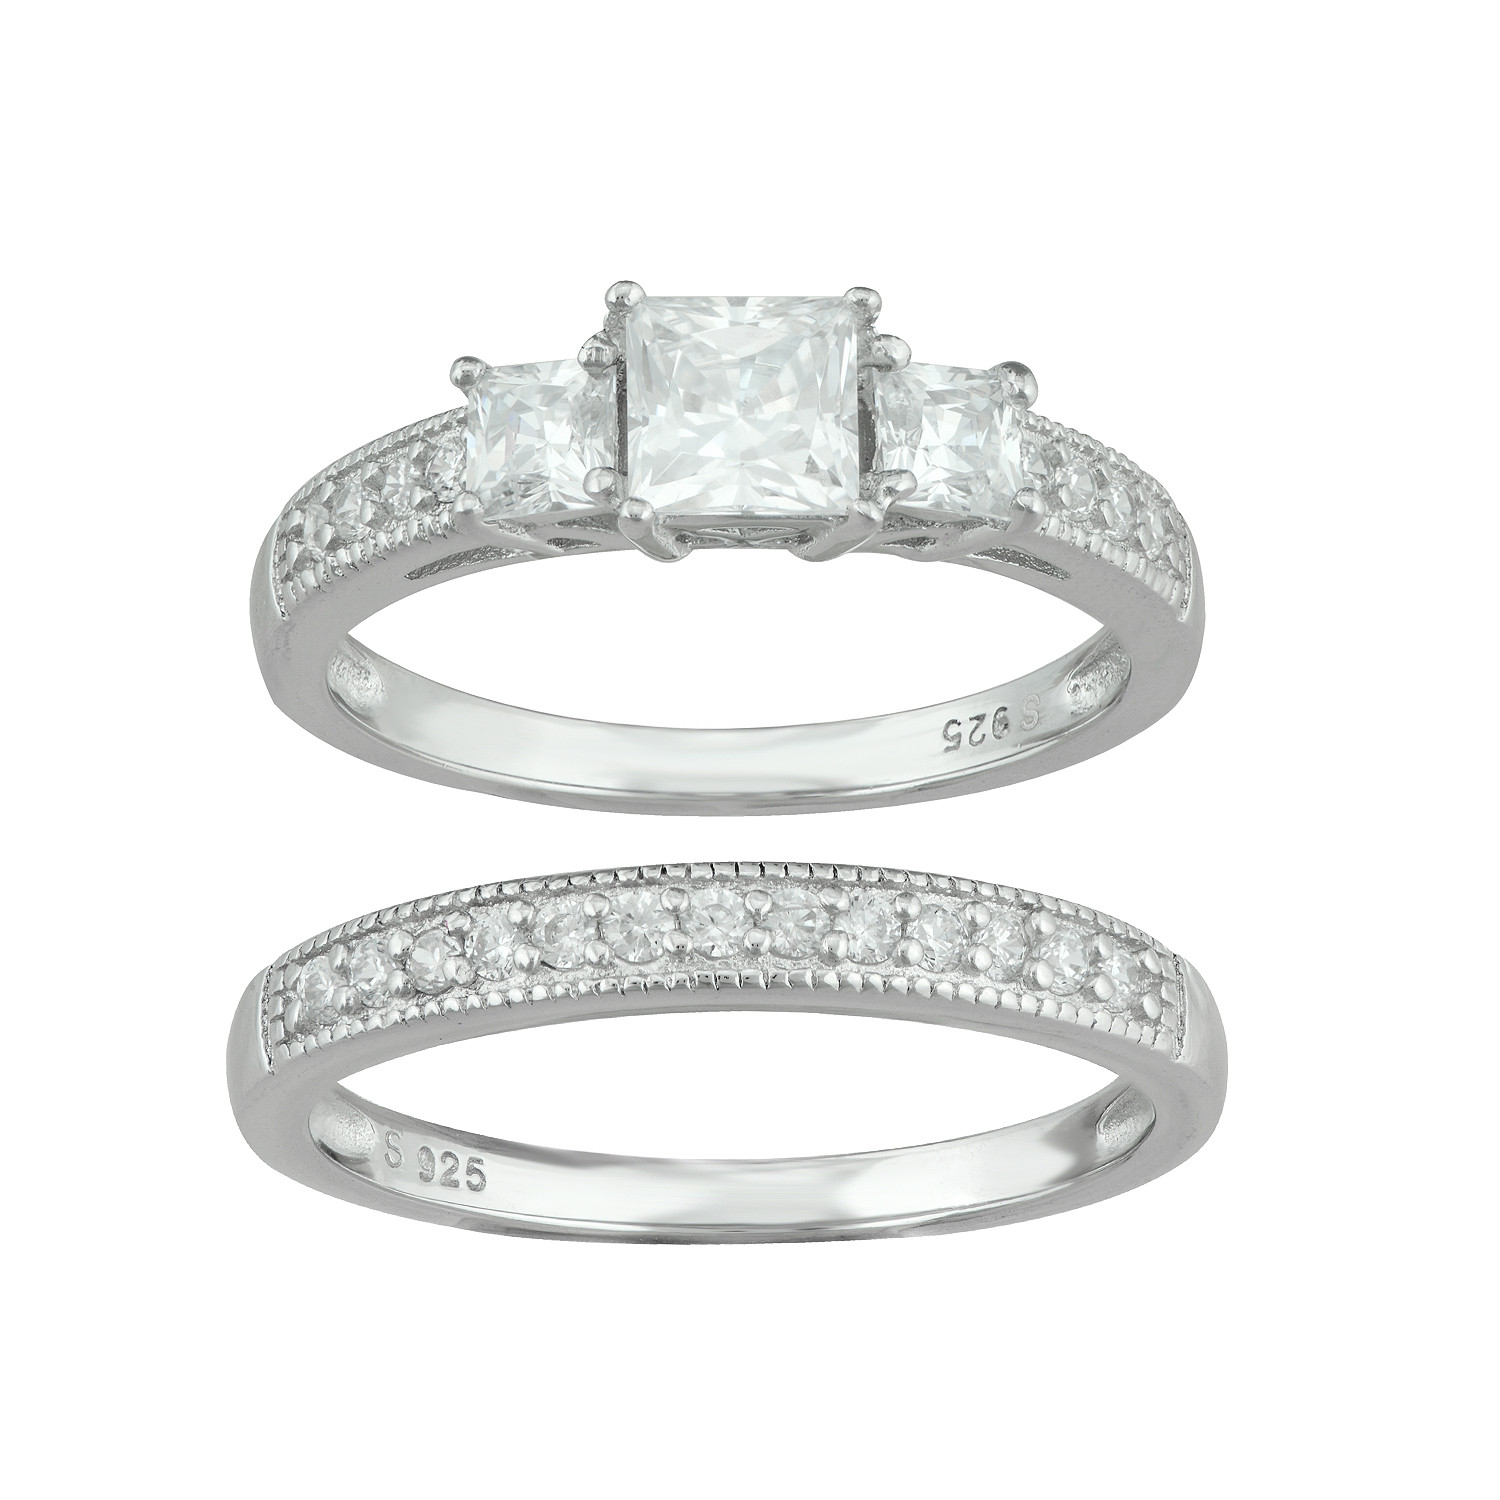 Kmart Wedding Ring Sets
 La s Princess Cut Sterling Silver Cubic Zirconia Bridal